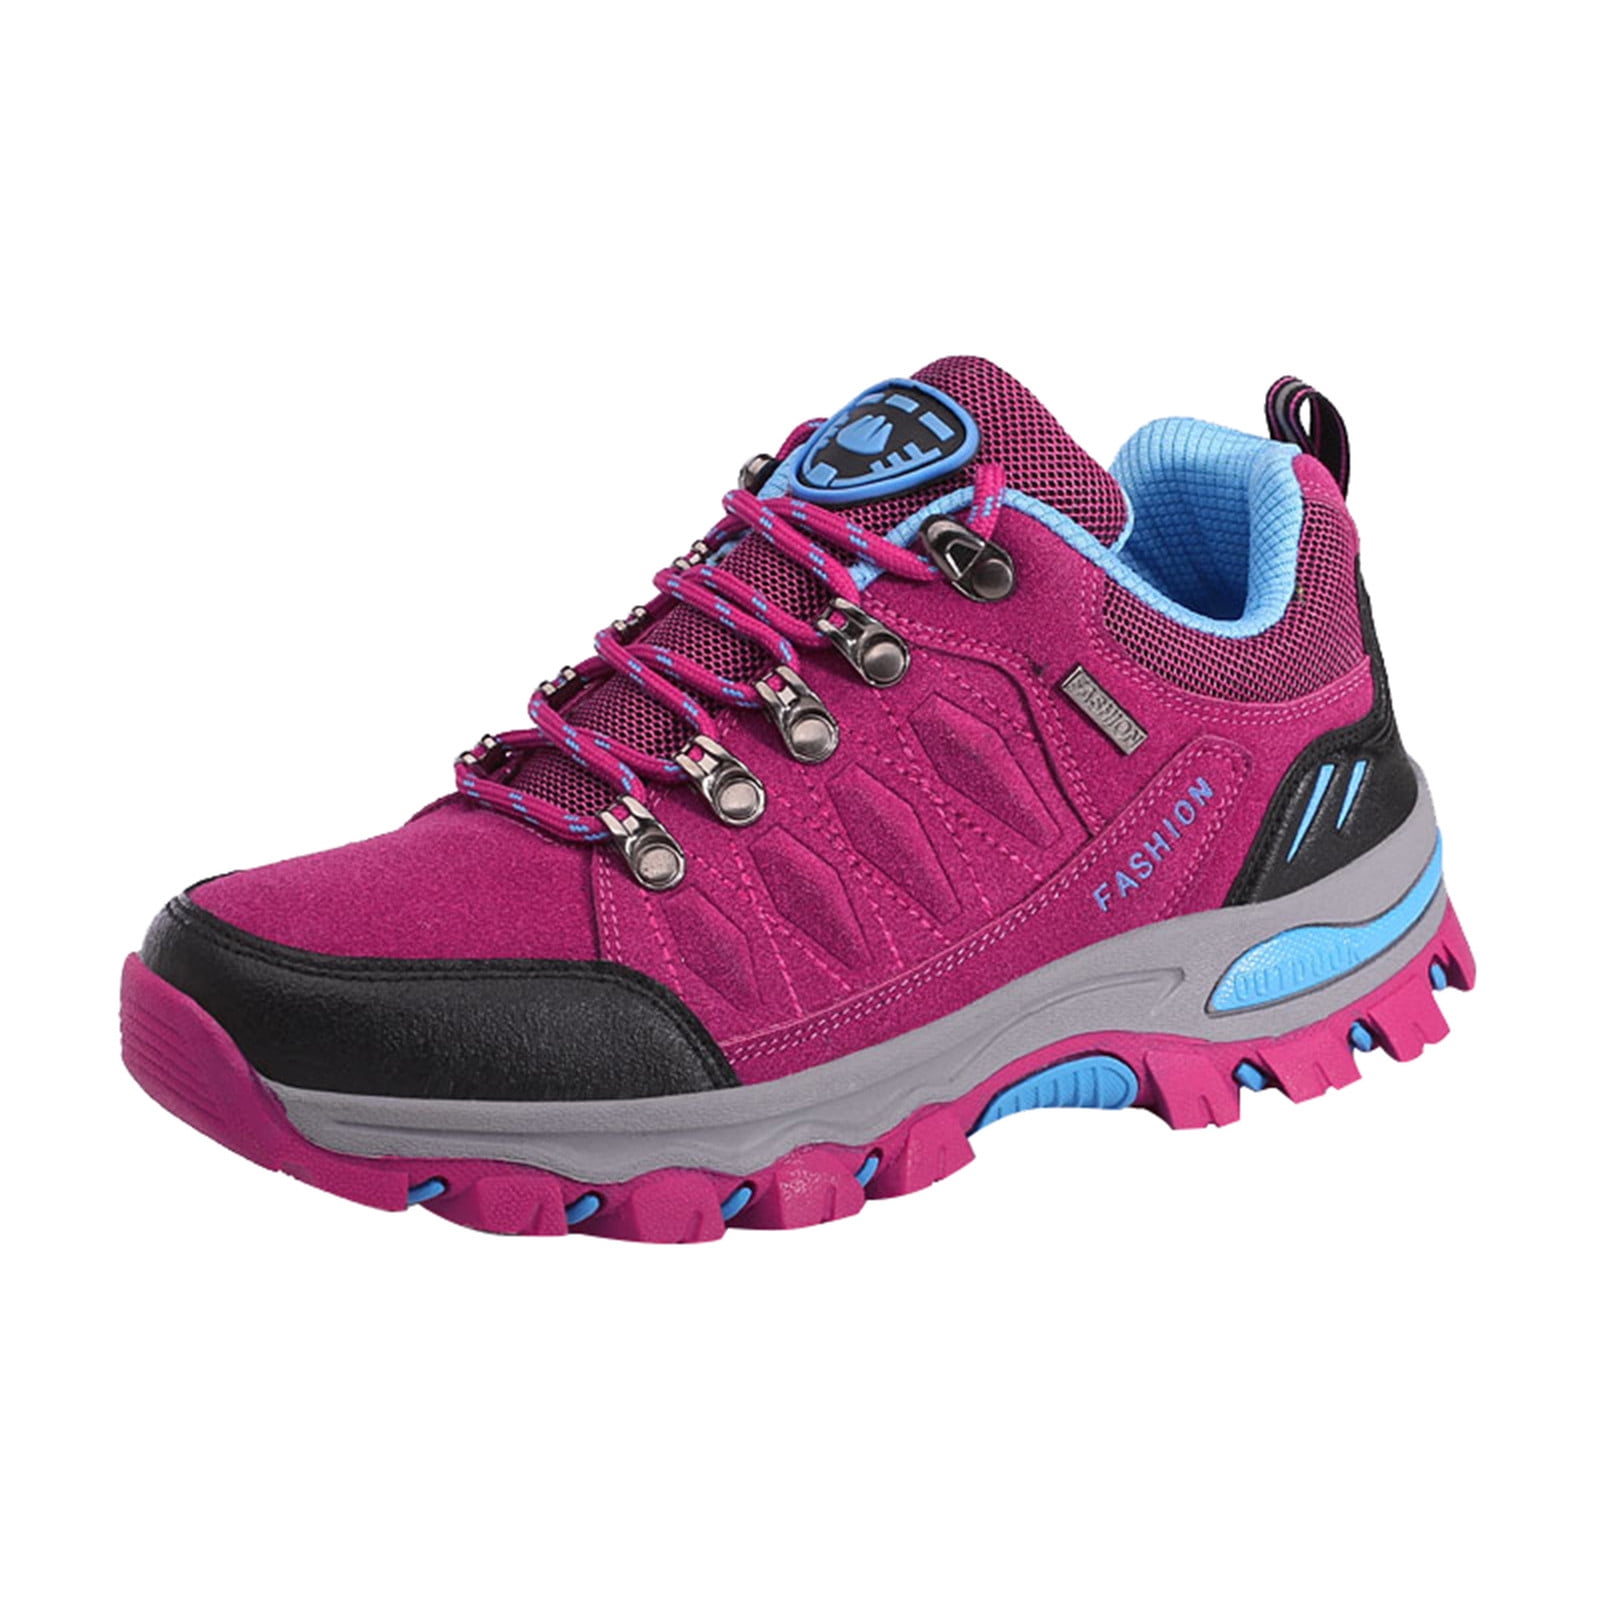 KBKYBUYZ Women Outdoor Sports Climbing Hiking Shoes Waterproof Trekking ...